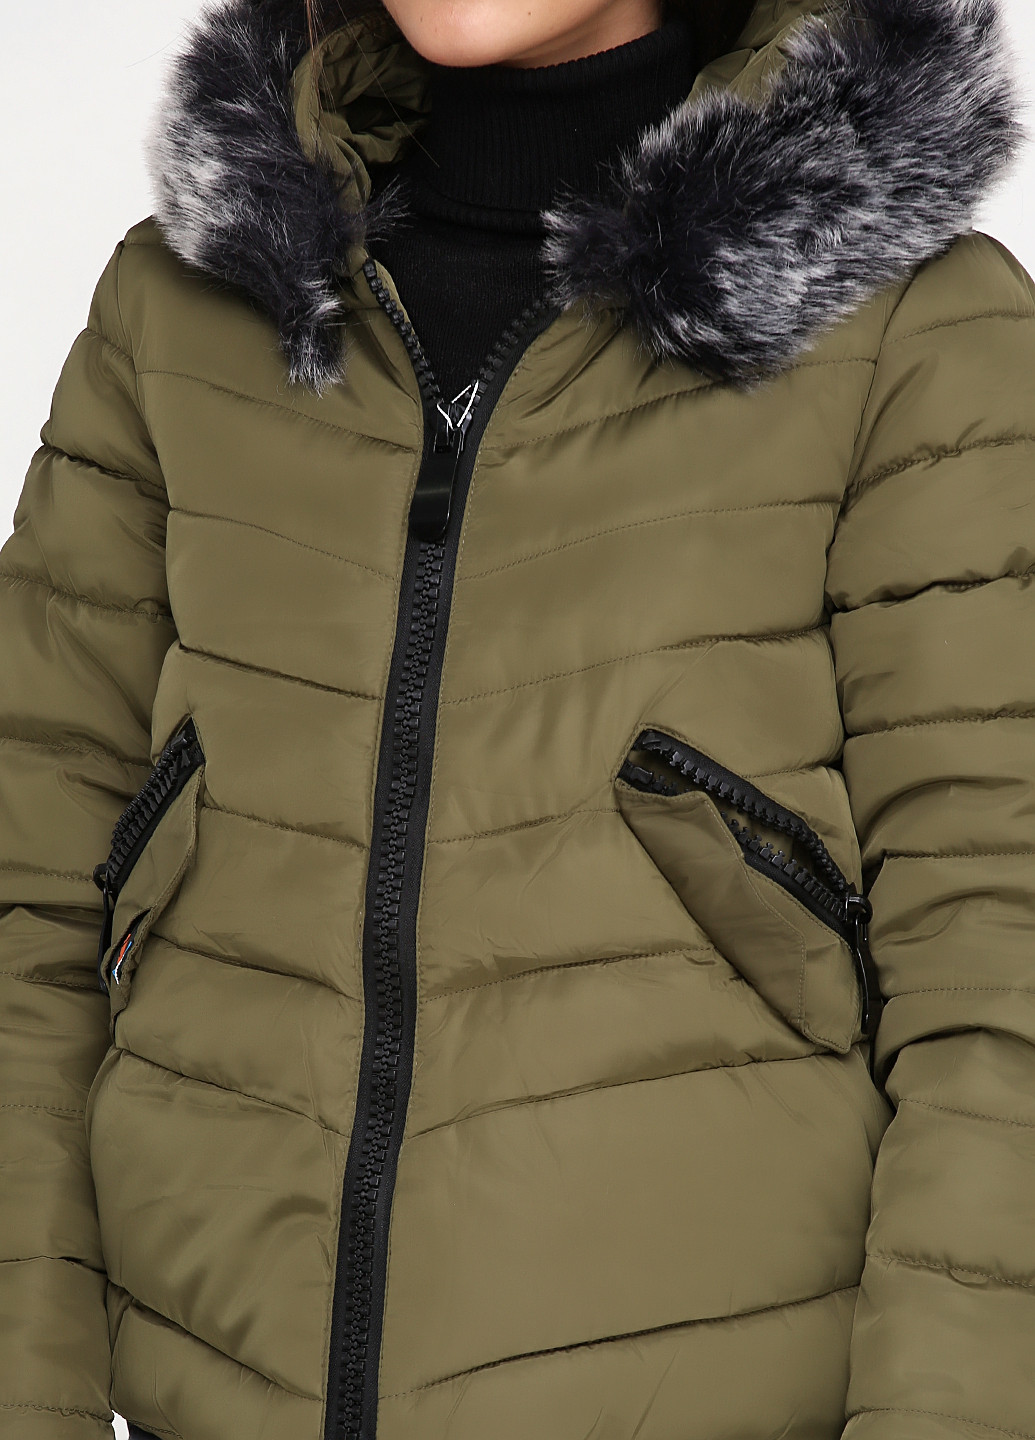 Оливковая (хаки) зимняя куртка XINYU